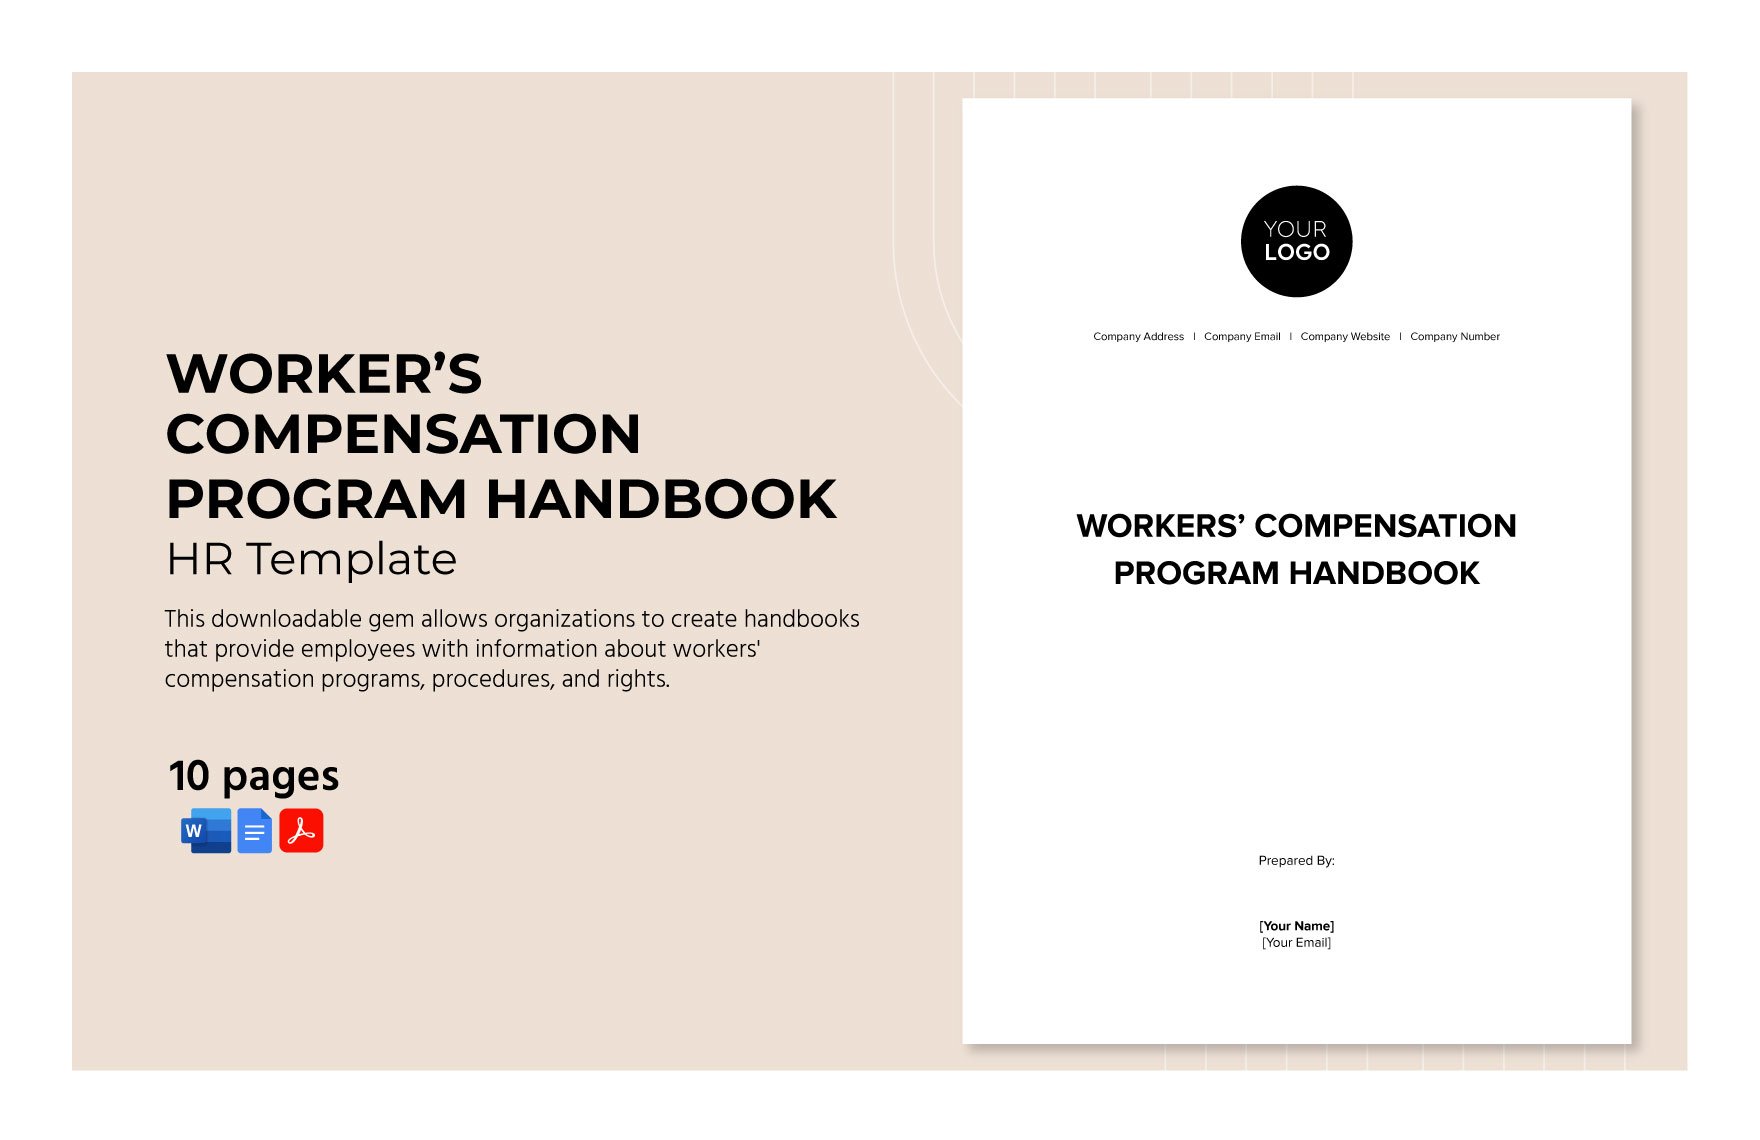 Workers' Compensation Program Handbook HR Template